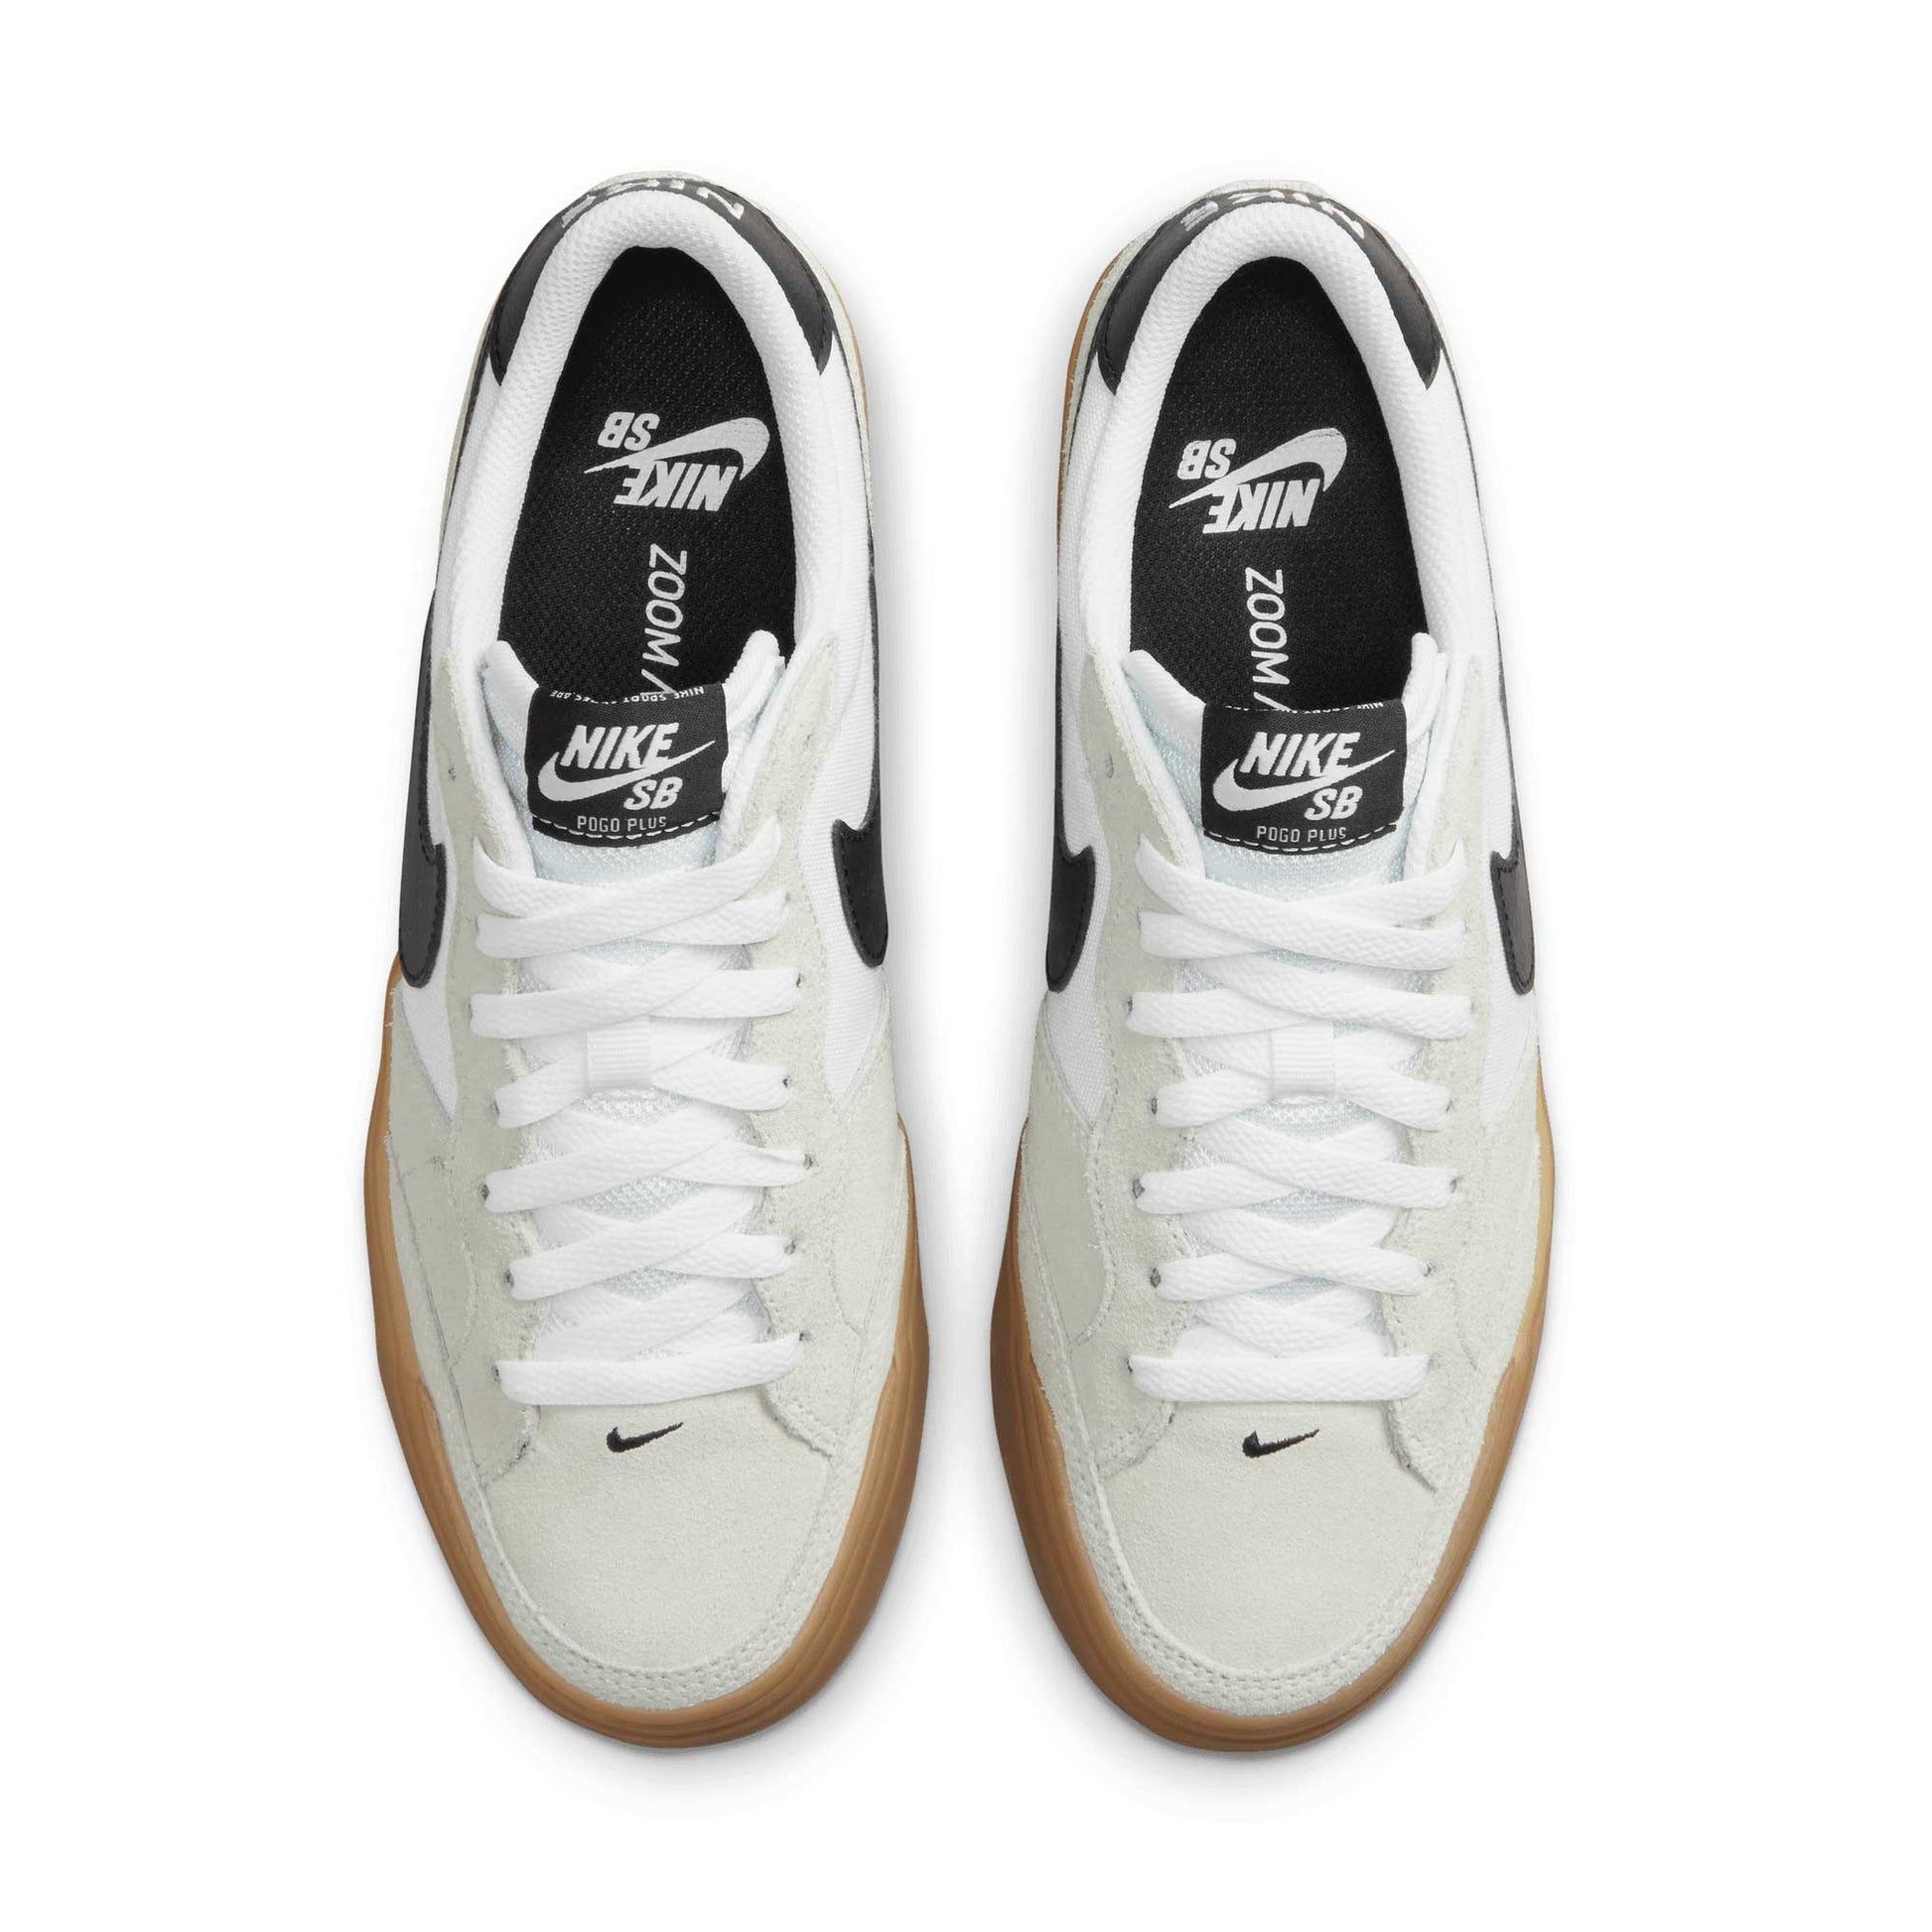 Nike SB Pogo, white/black-white-gum light brown - Tiki Room Skateboards - 3